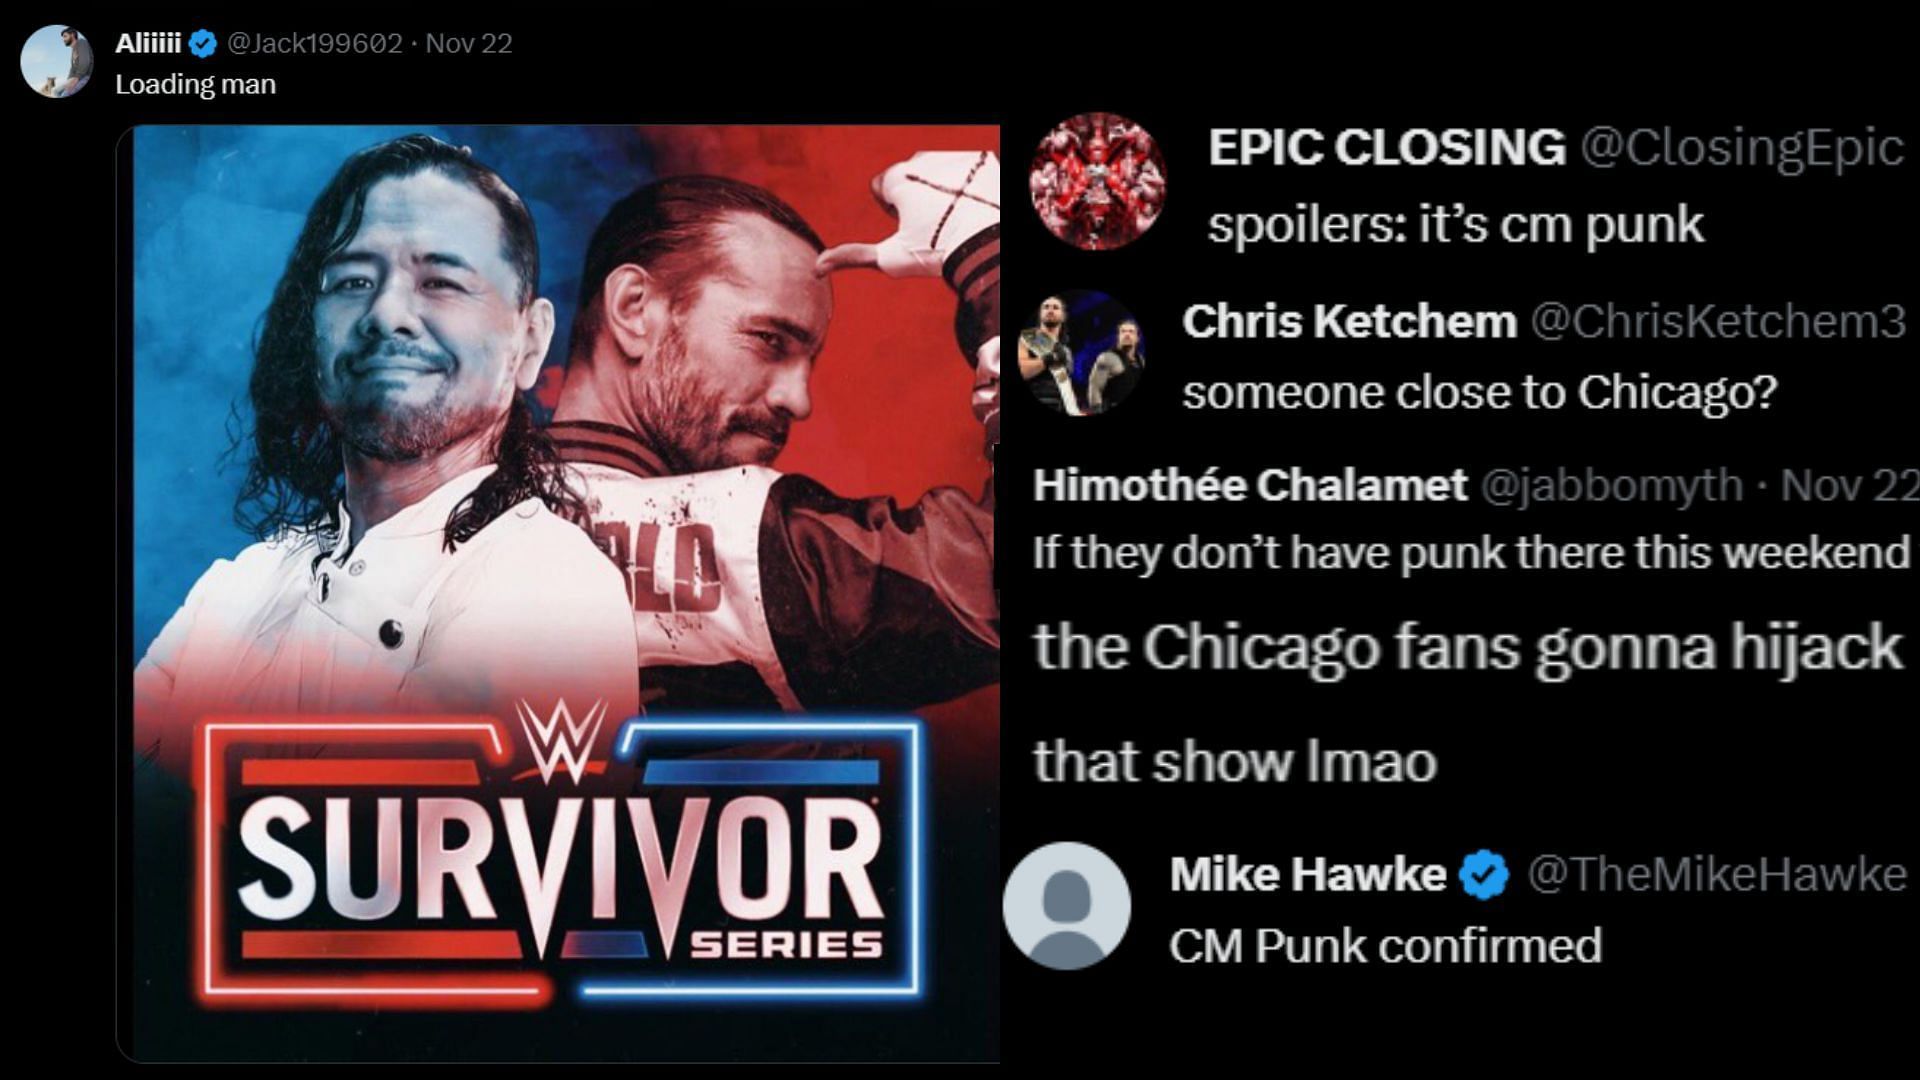 CM Punk is still the talk of wrestling town